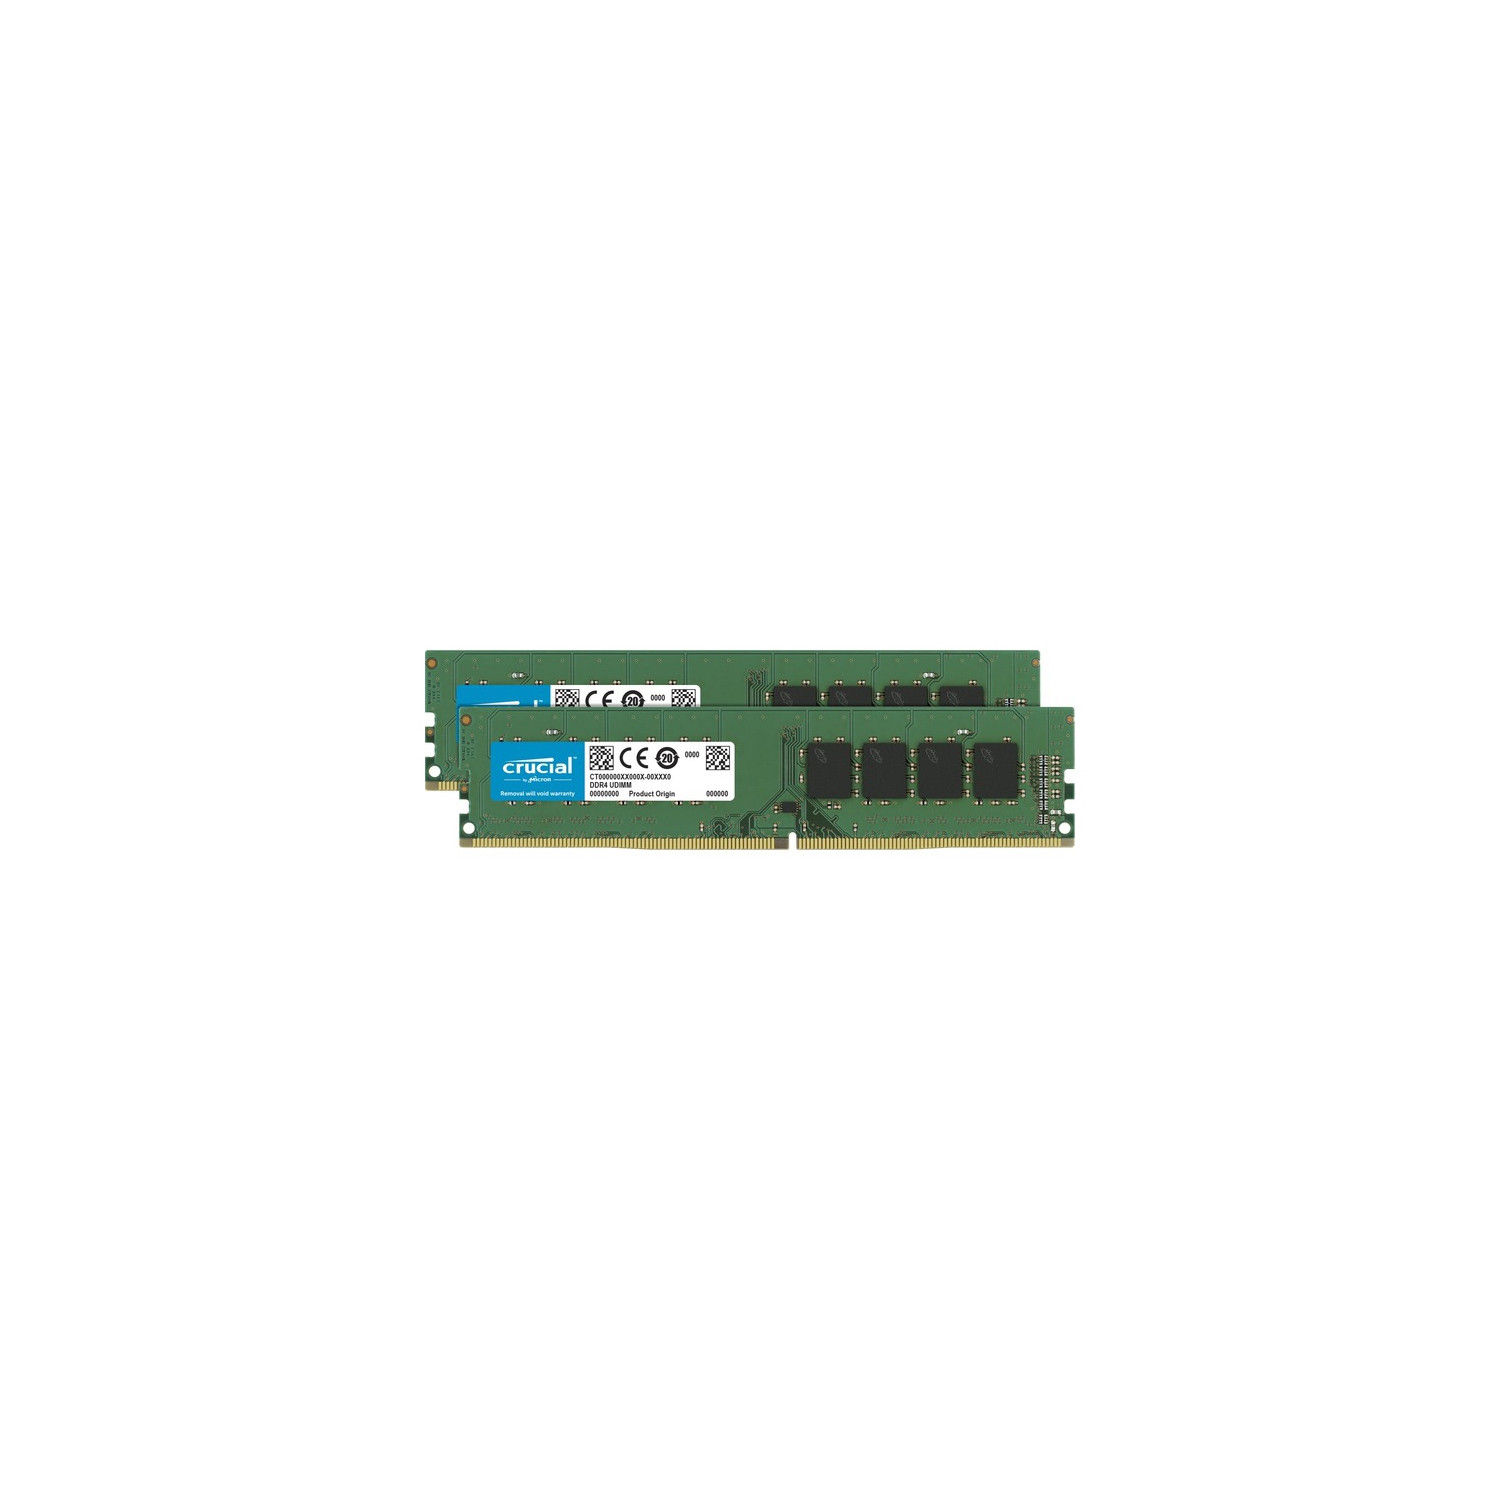 Crucial 64GB (2 x 32GB) DDR4 SDRAM Memory Kit CT2K32G4DFD832A